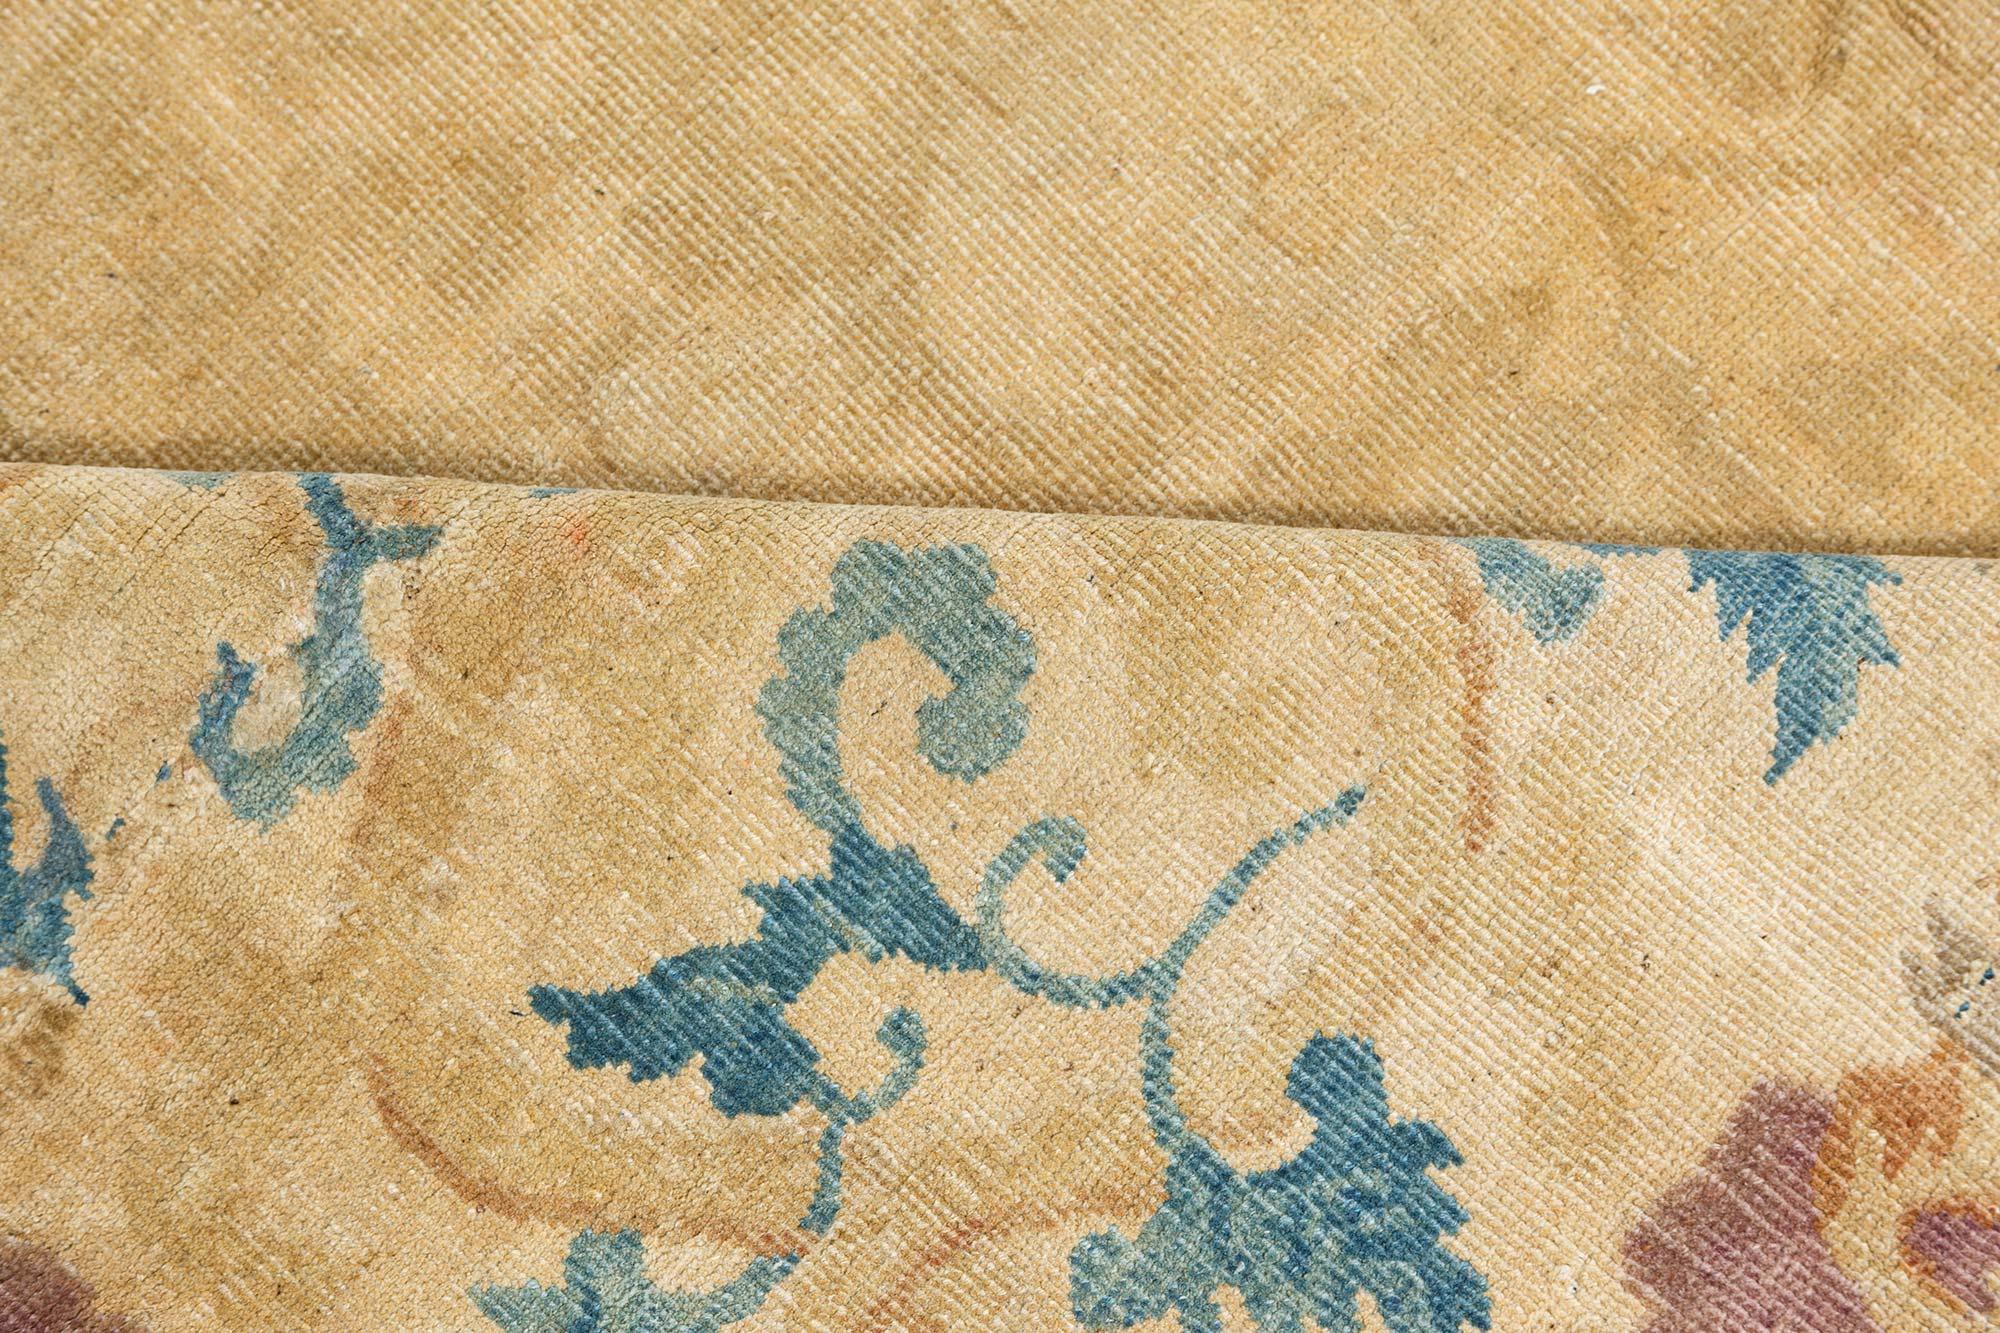 One-of-a-kind Vintage Chinese Botanic design rug (size adjusted)
Size: 12'1